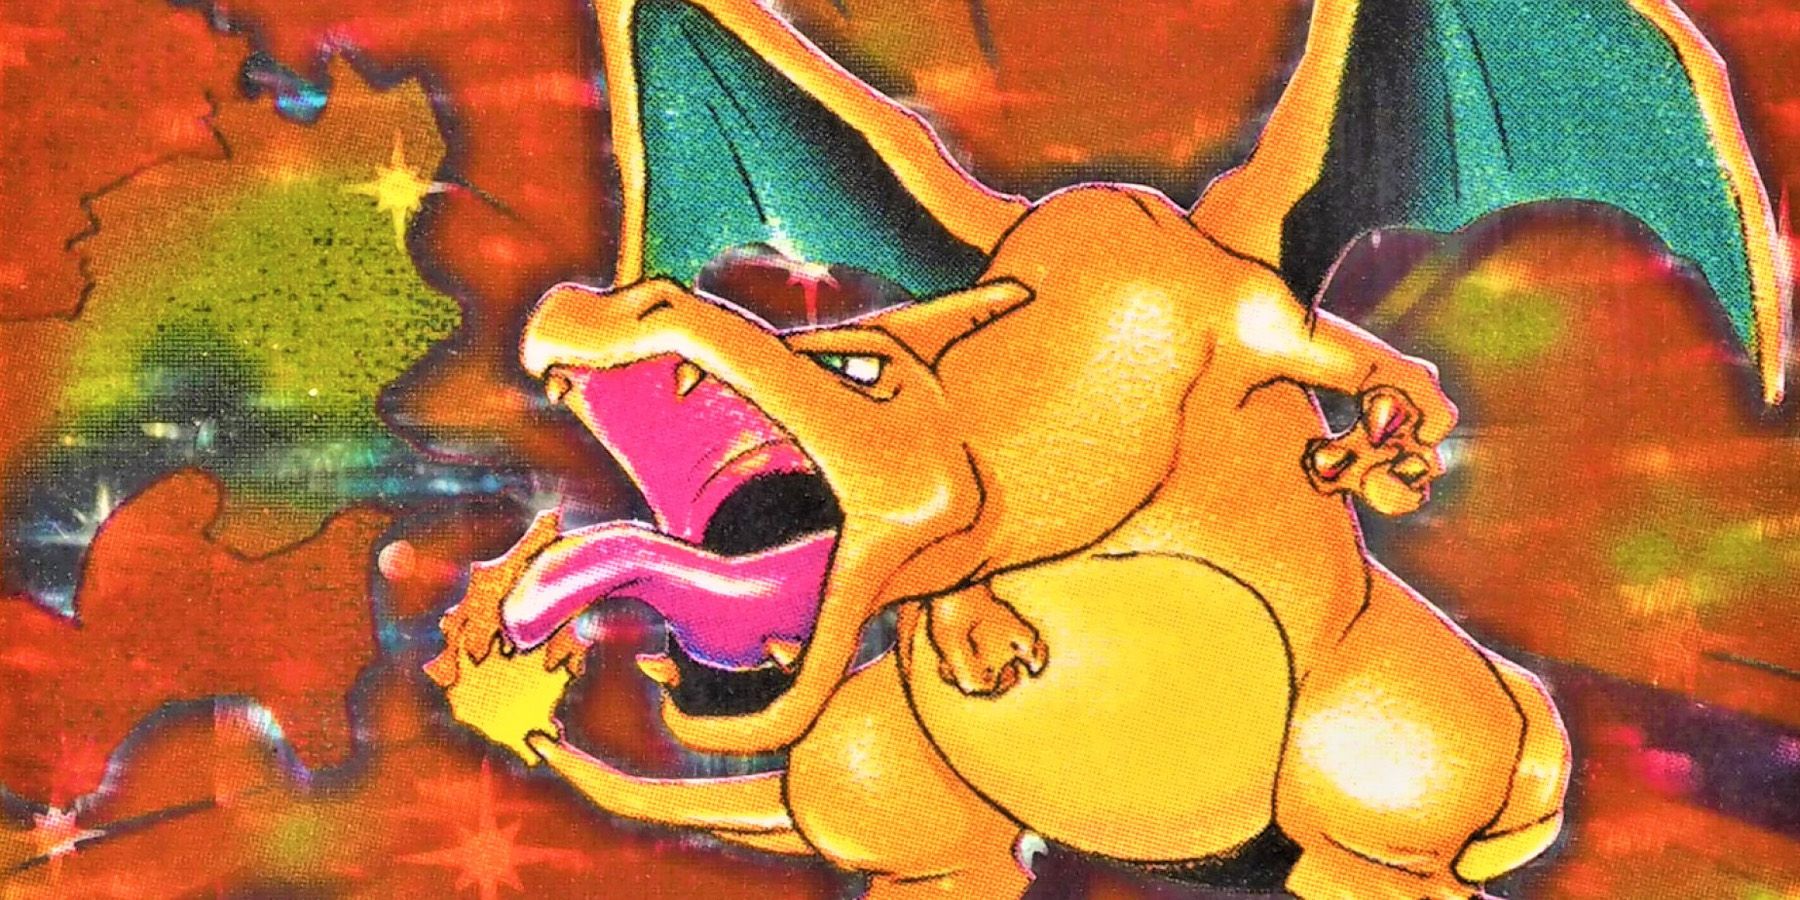 Charizard Pokemon TCG card artwork